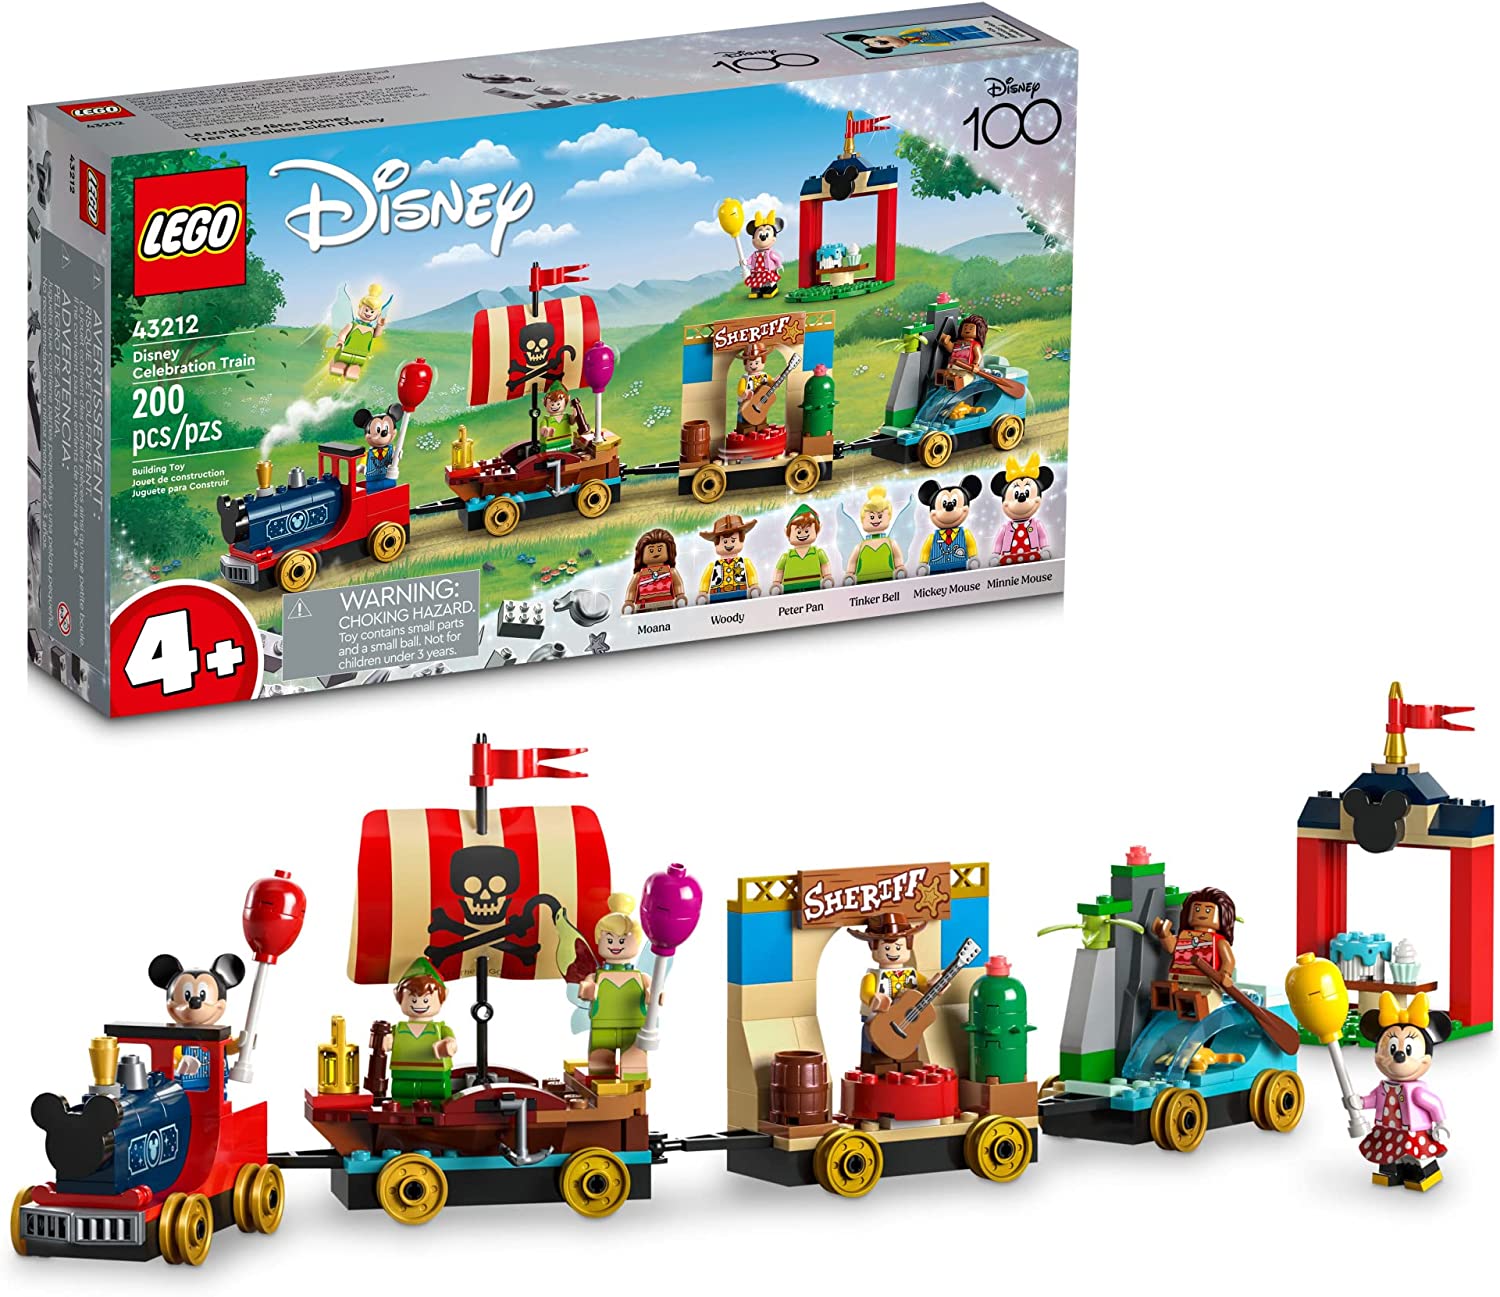 LEGO Disney 100 Celebration Train